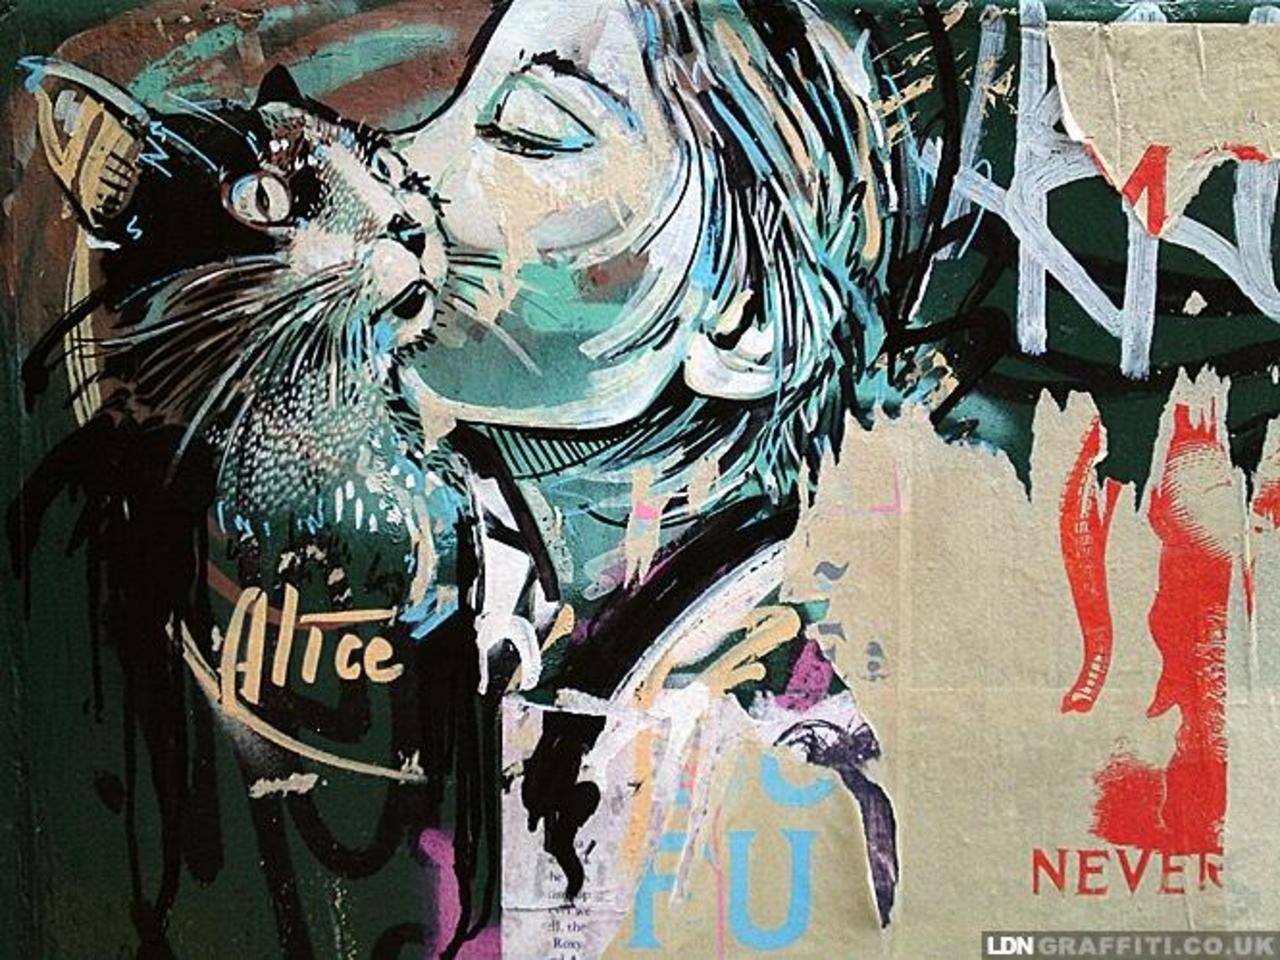 “@Pitchuskita: Alice
#streetart #art #urbanart #graffiti http://t.co/K0f29hiLON